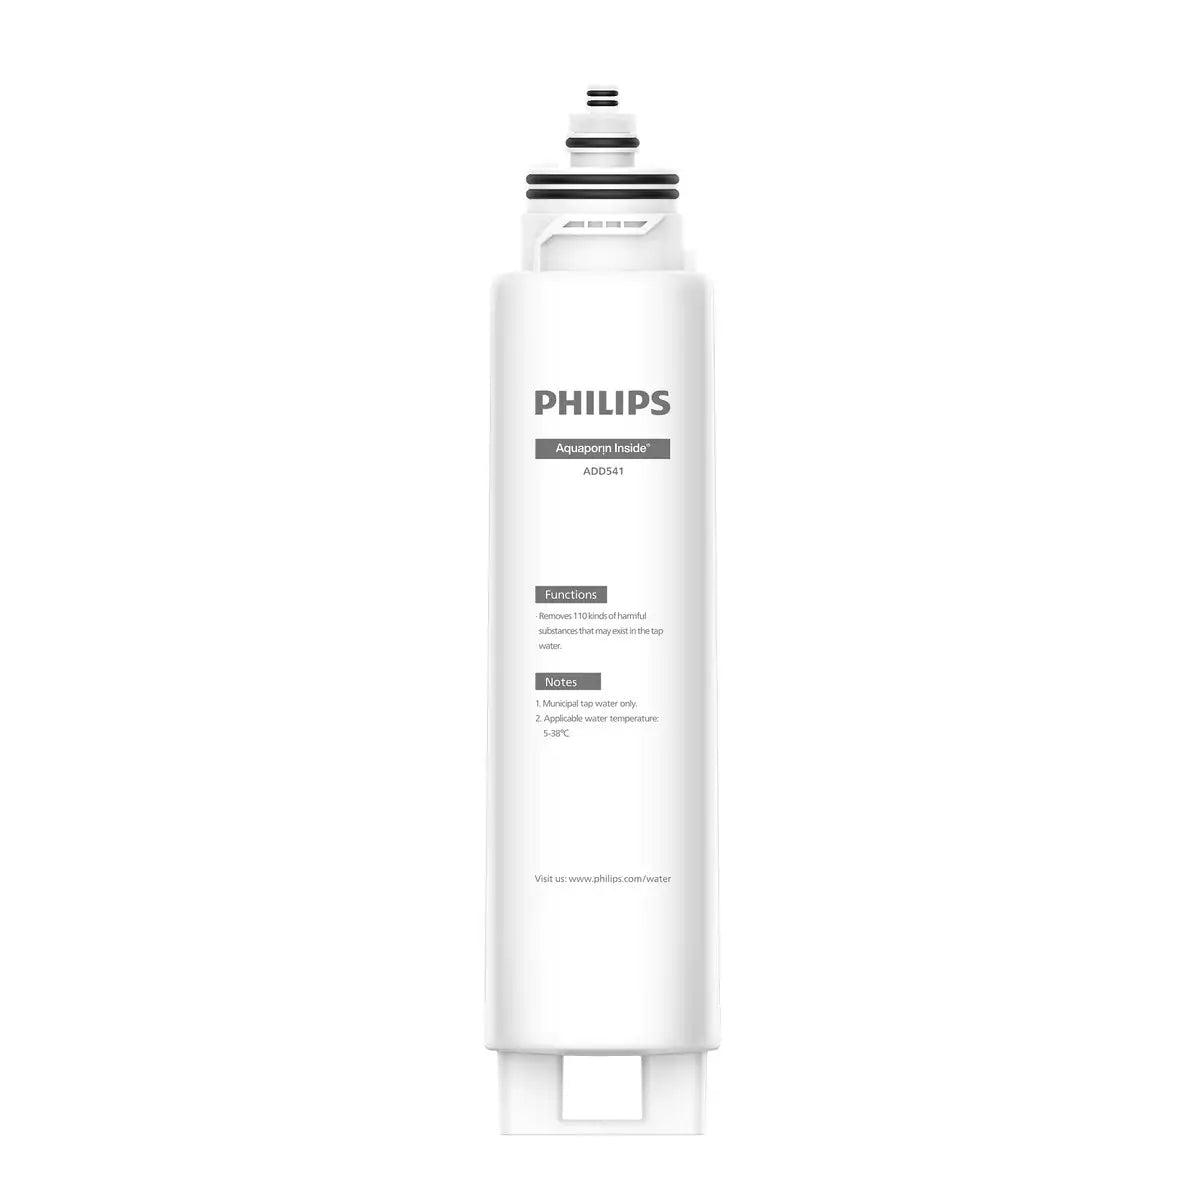 Philips 飛利浦 ADD541 RO純淨即熱飲水機濾芯 (適用於ADD6901) - Fever Electrics 電器熱網購平台